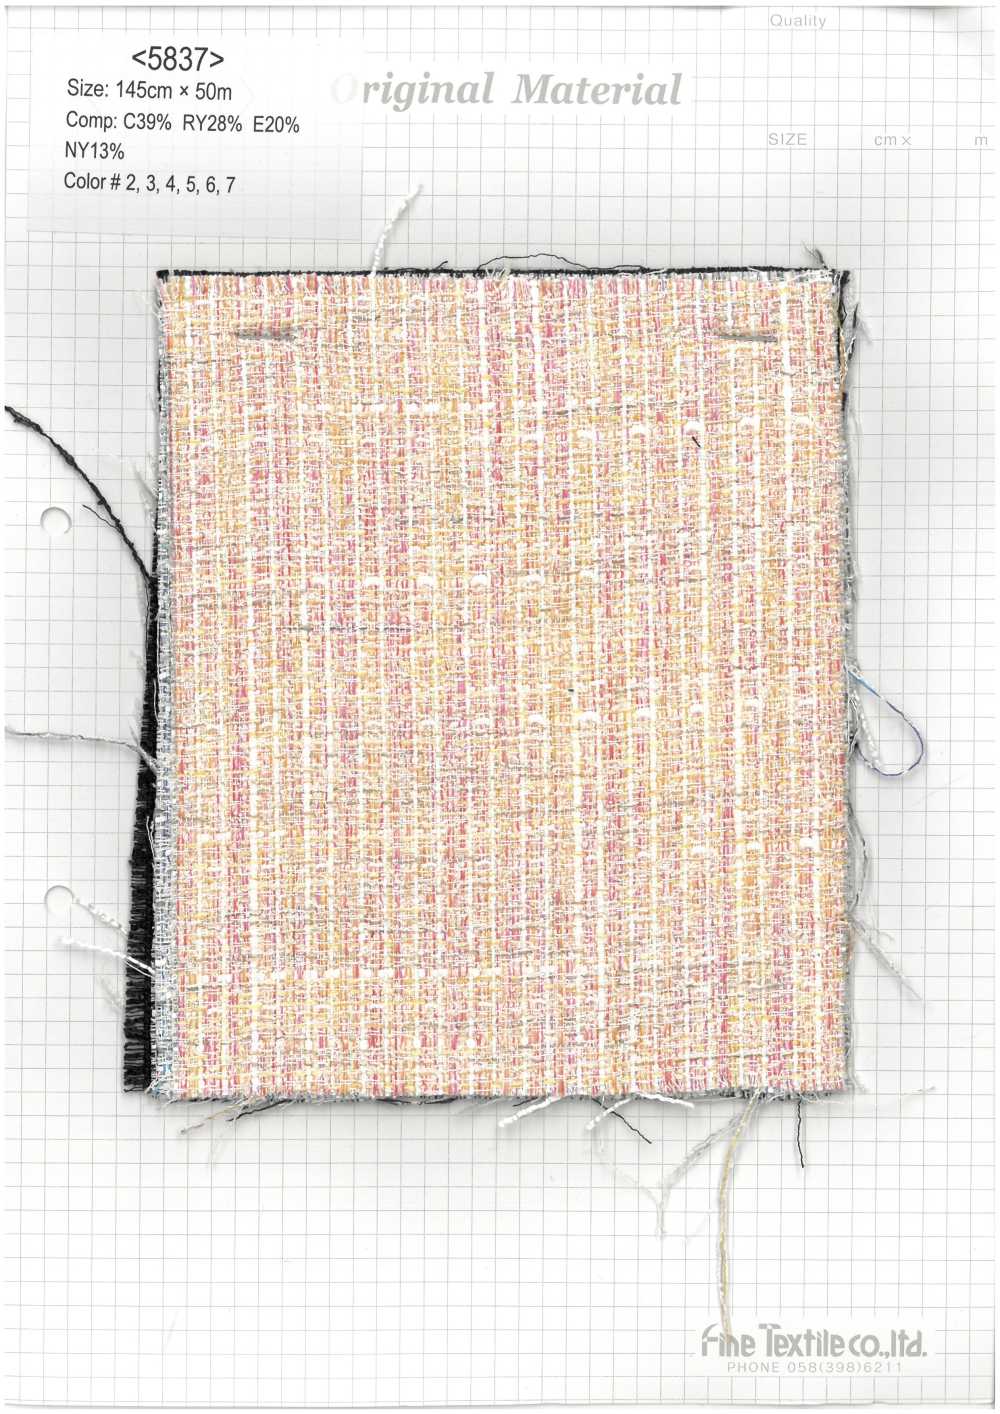 5837 Boucher Kasuri[Fabrication De Textile] Textile Fin